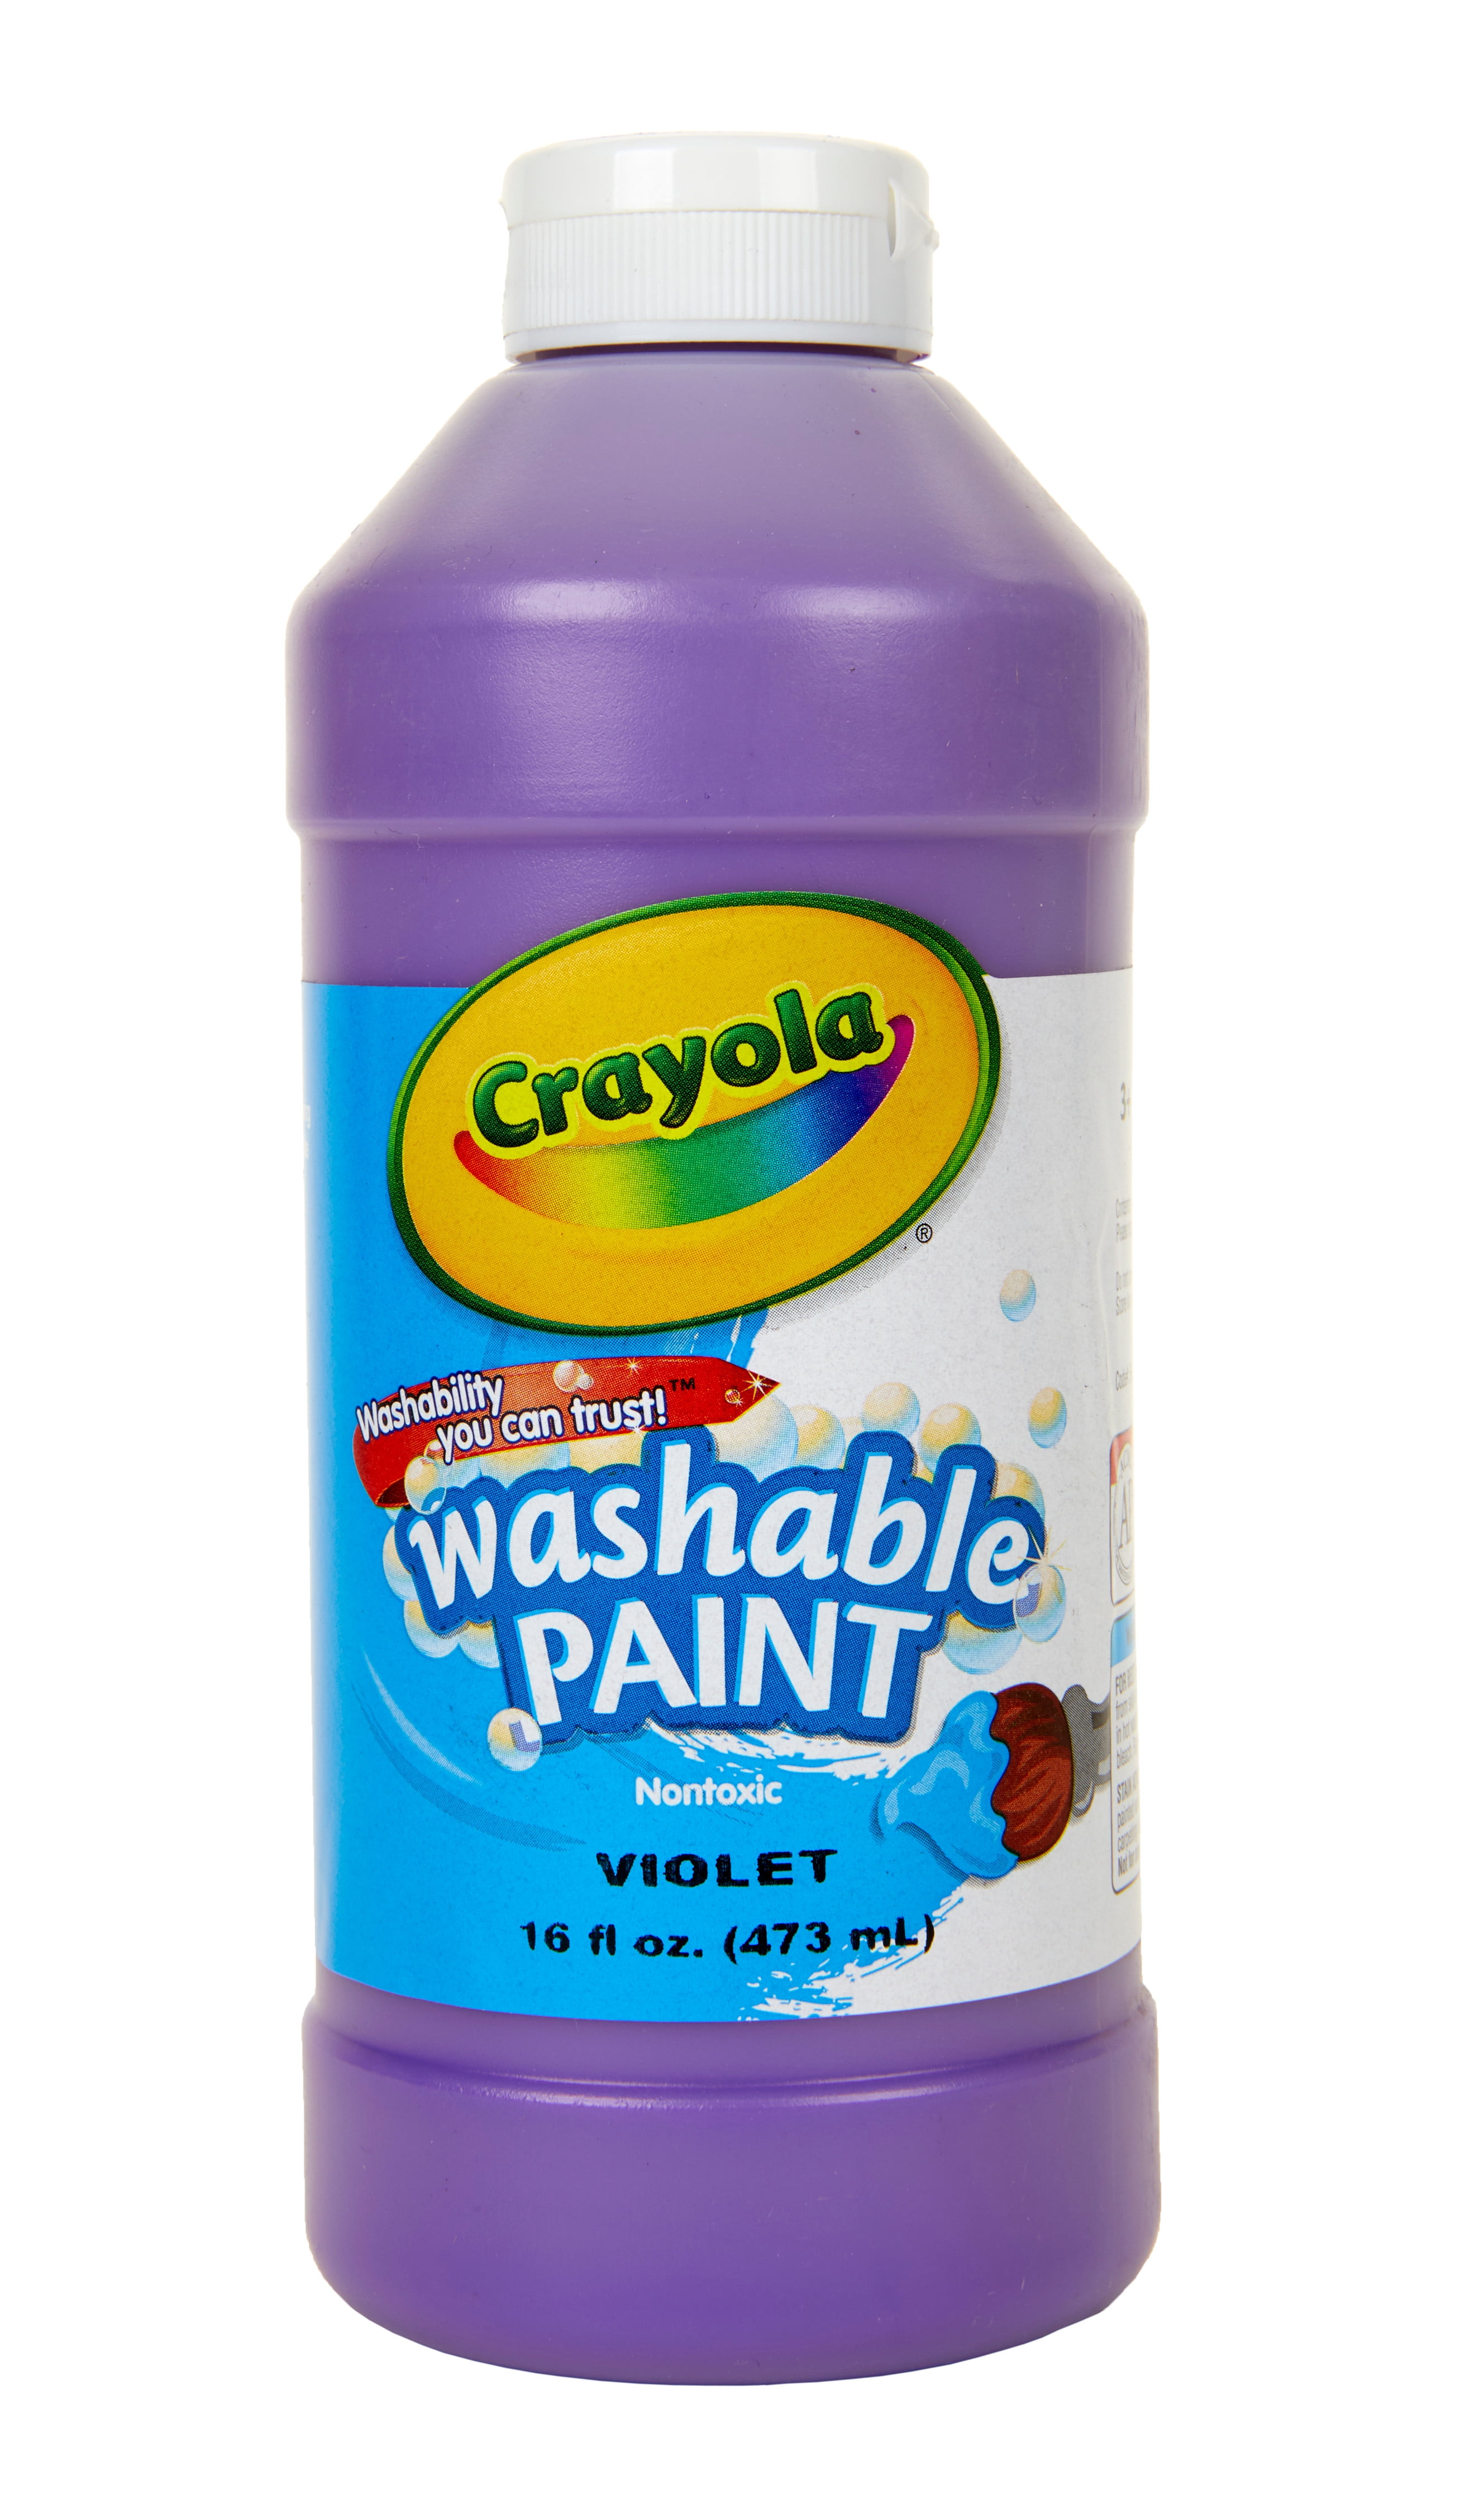 Crayola pint paint